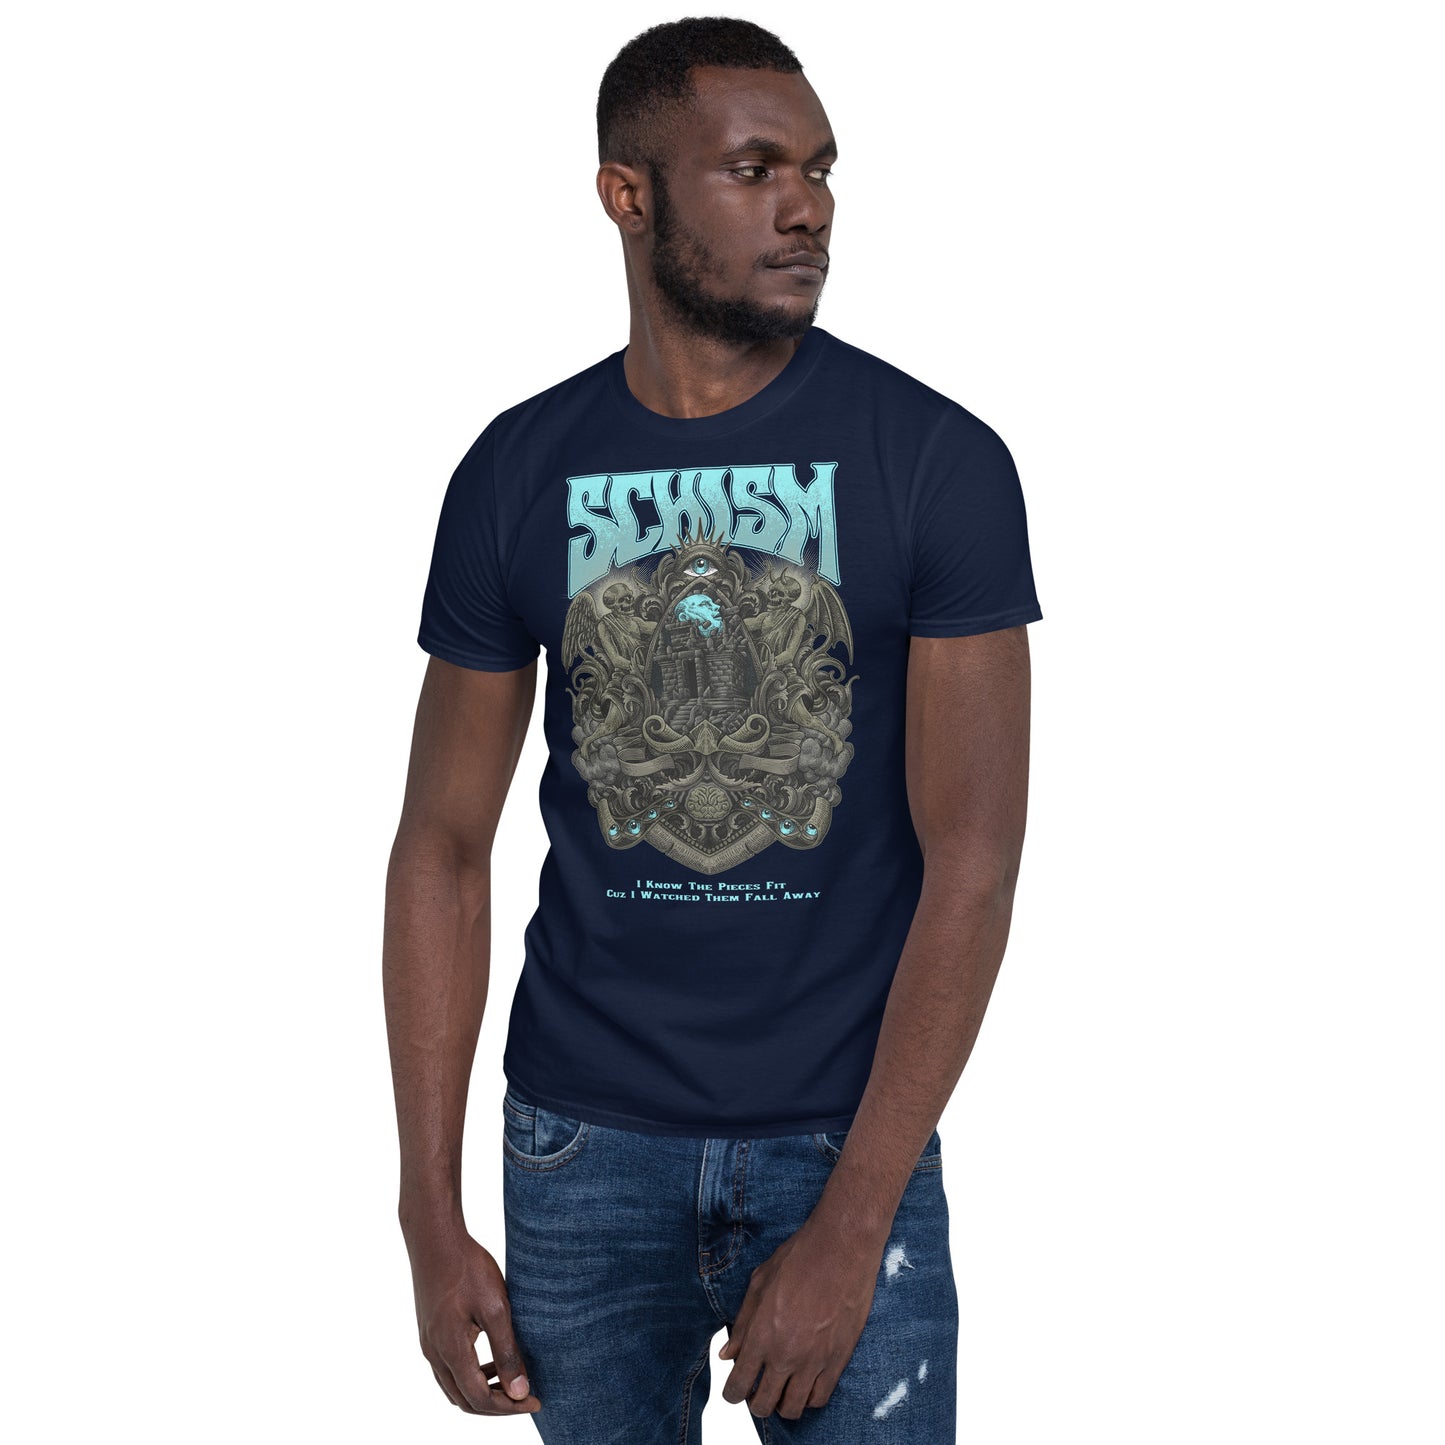 Schism - Men's T-shirt